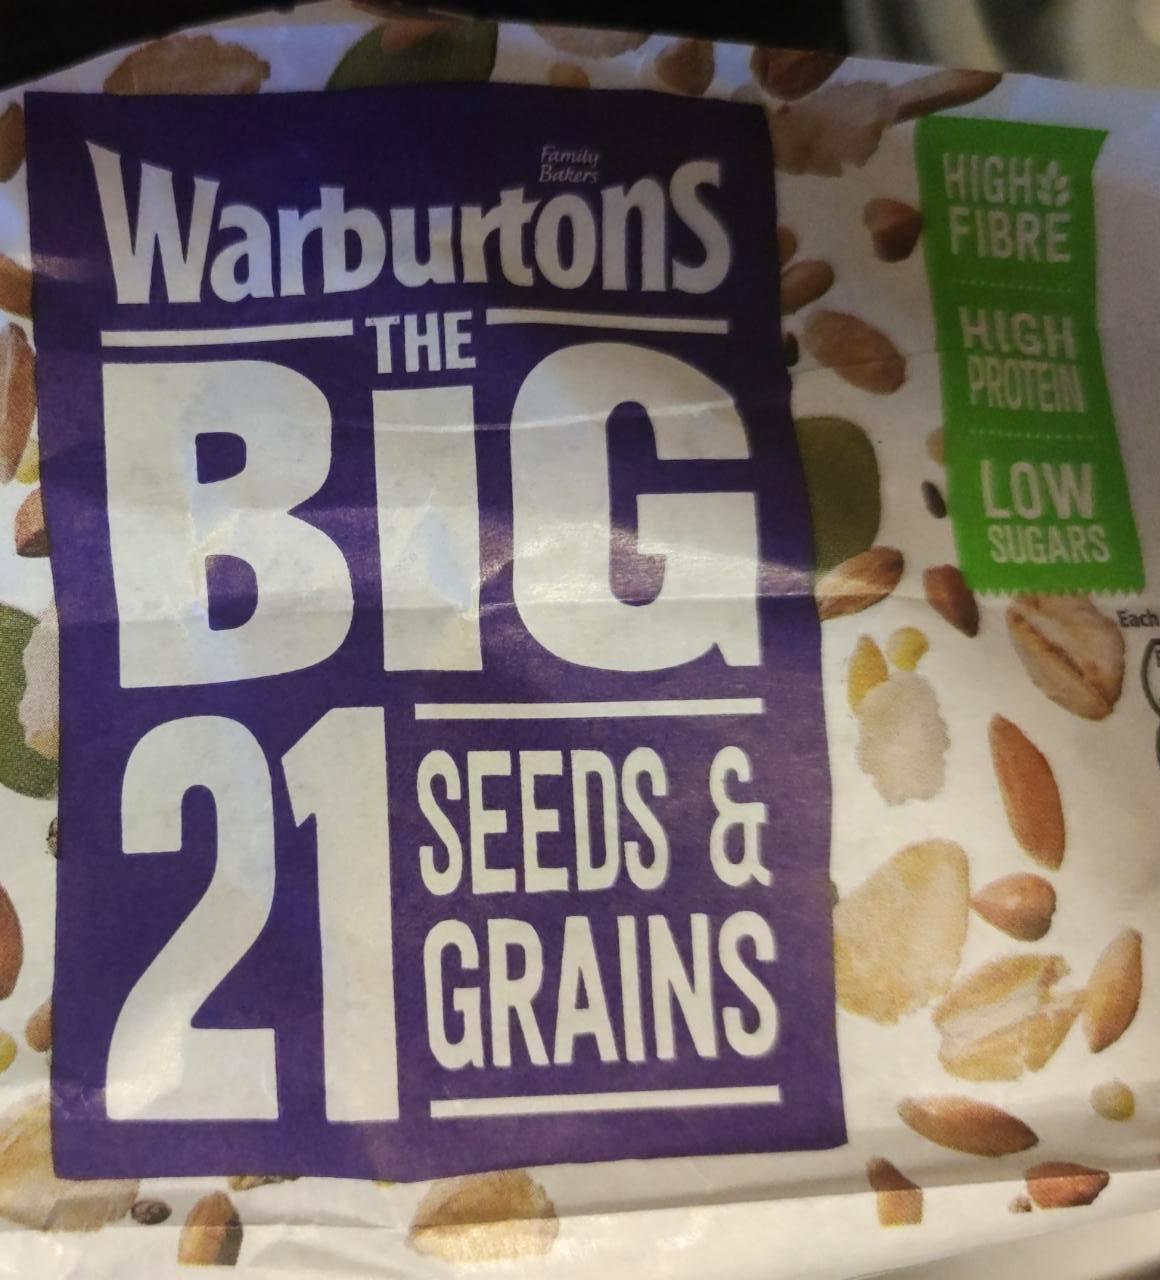 Képek - The big 21 seeds & grain Warburtons